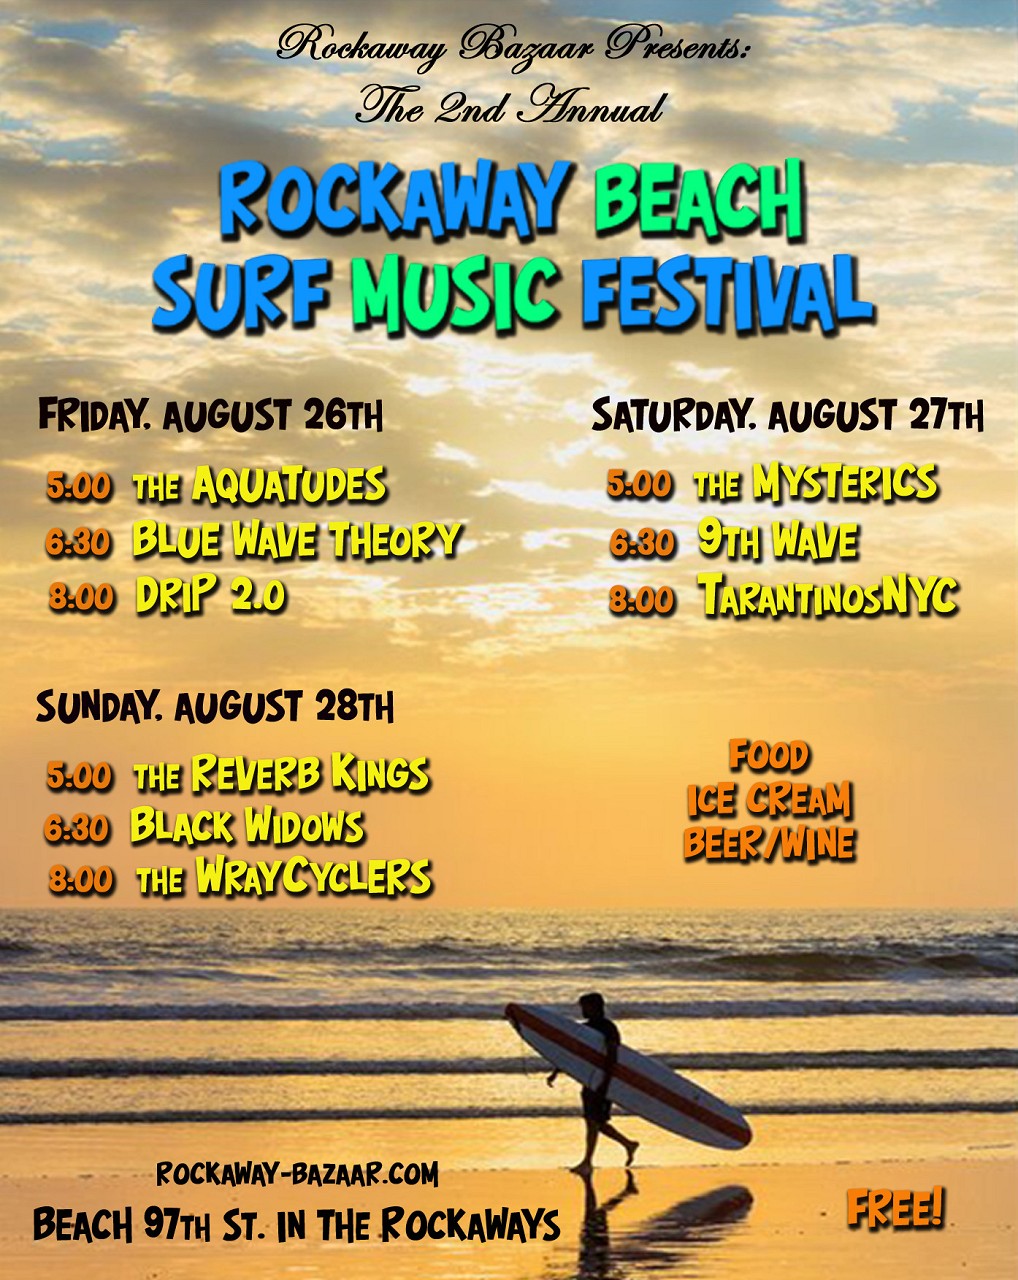 Rockaway Beach Surf Music Fest schedule4 copy